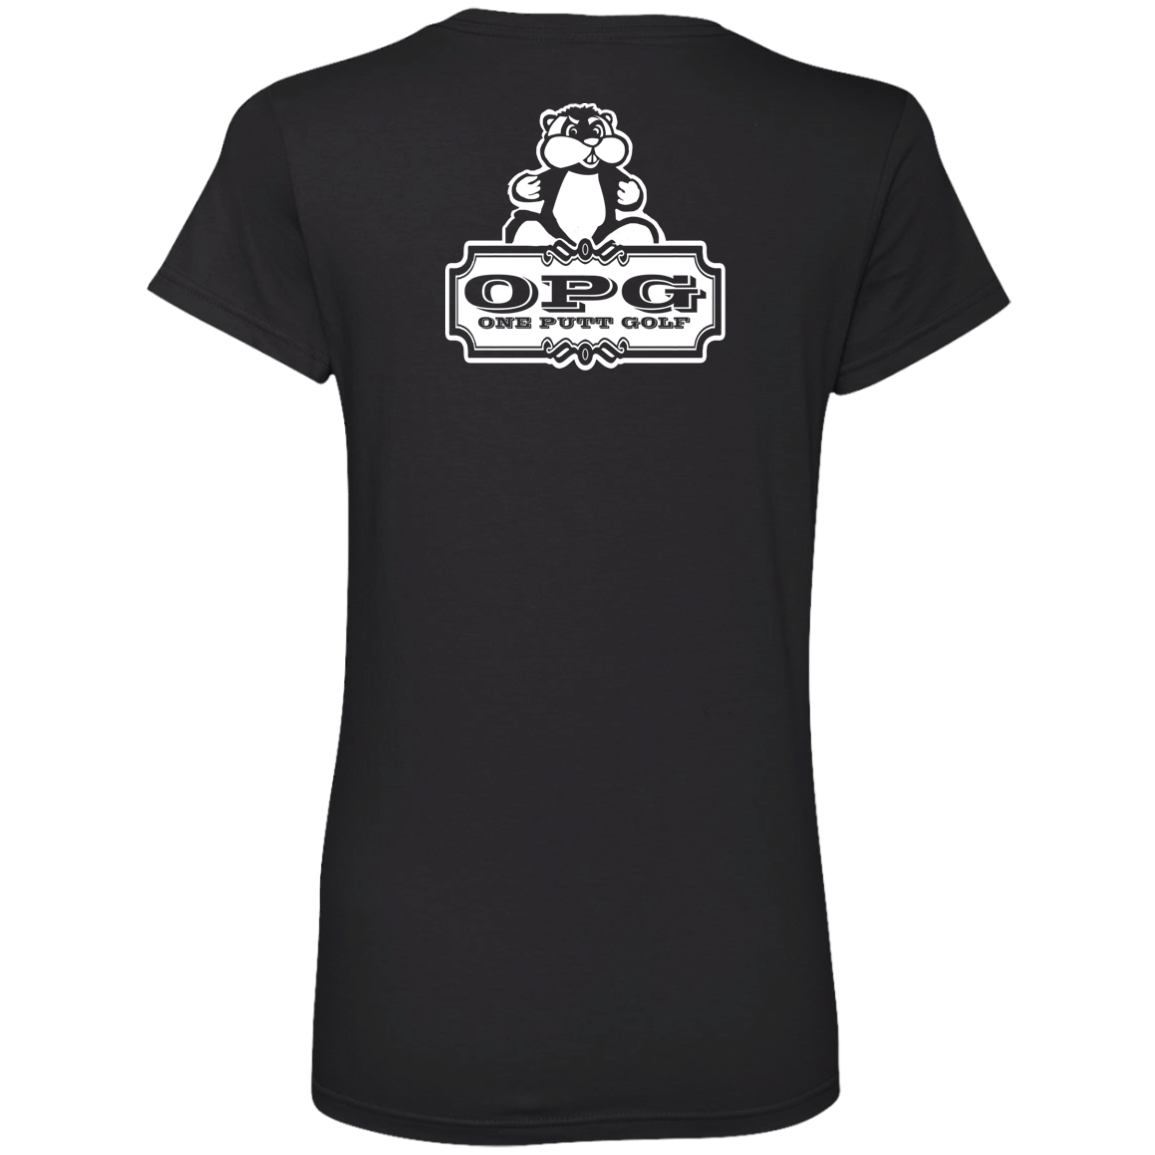 OPG Custom Design #29. Who's Your Caddy? Caddy Shack Bill Murray Fan Art. Ladies' V-Neck 100% Ring Spun Cotton T-Shirt